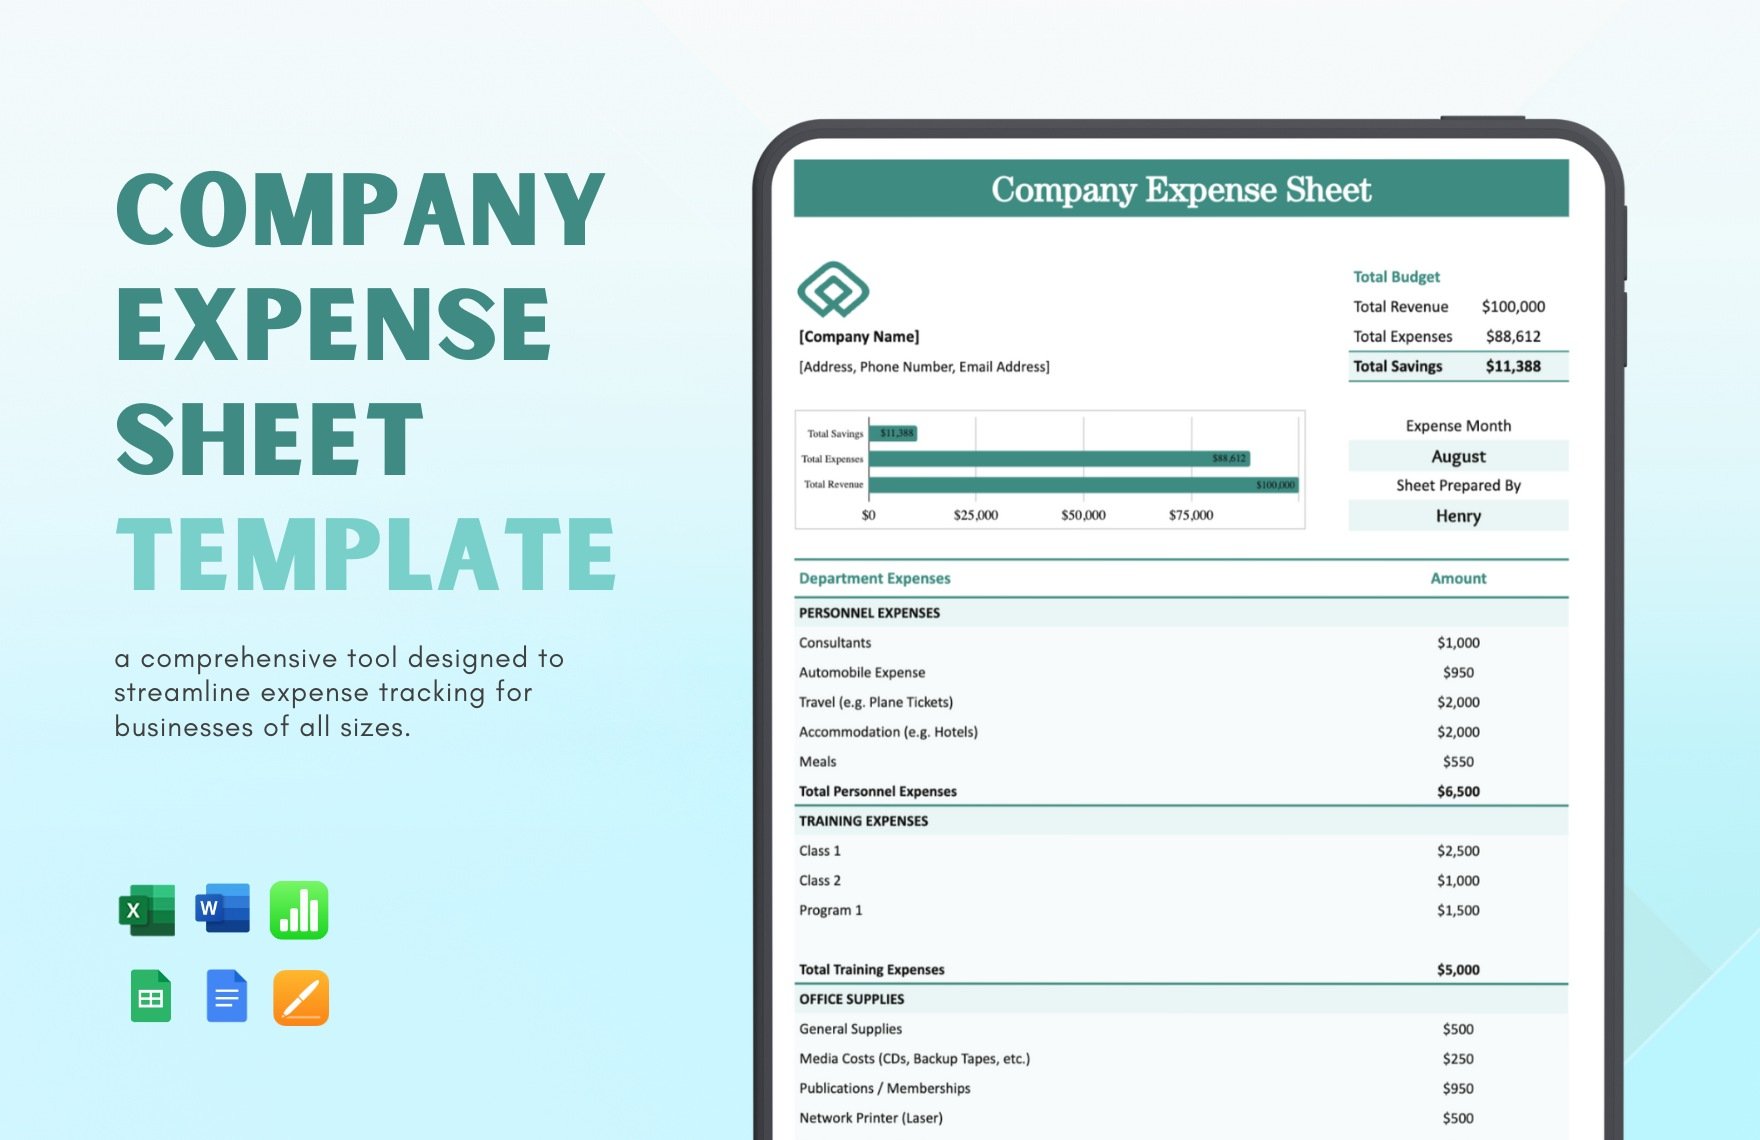 Company Expense Sheet Template